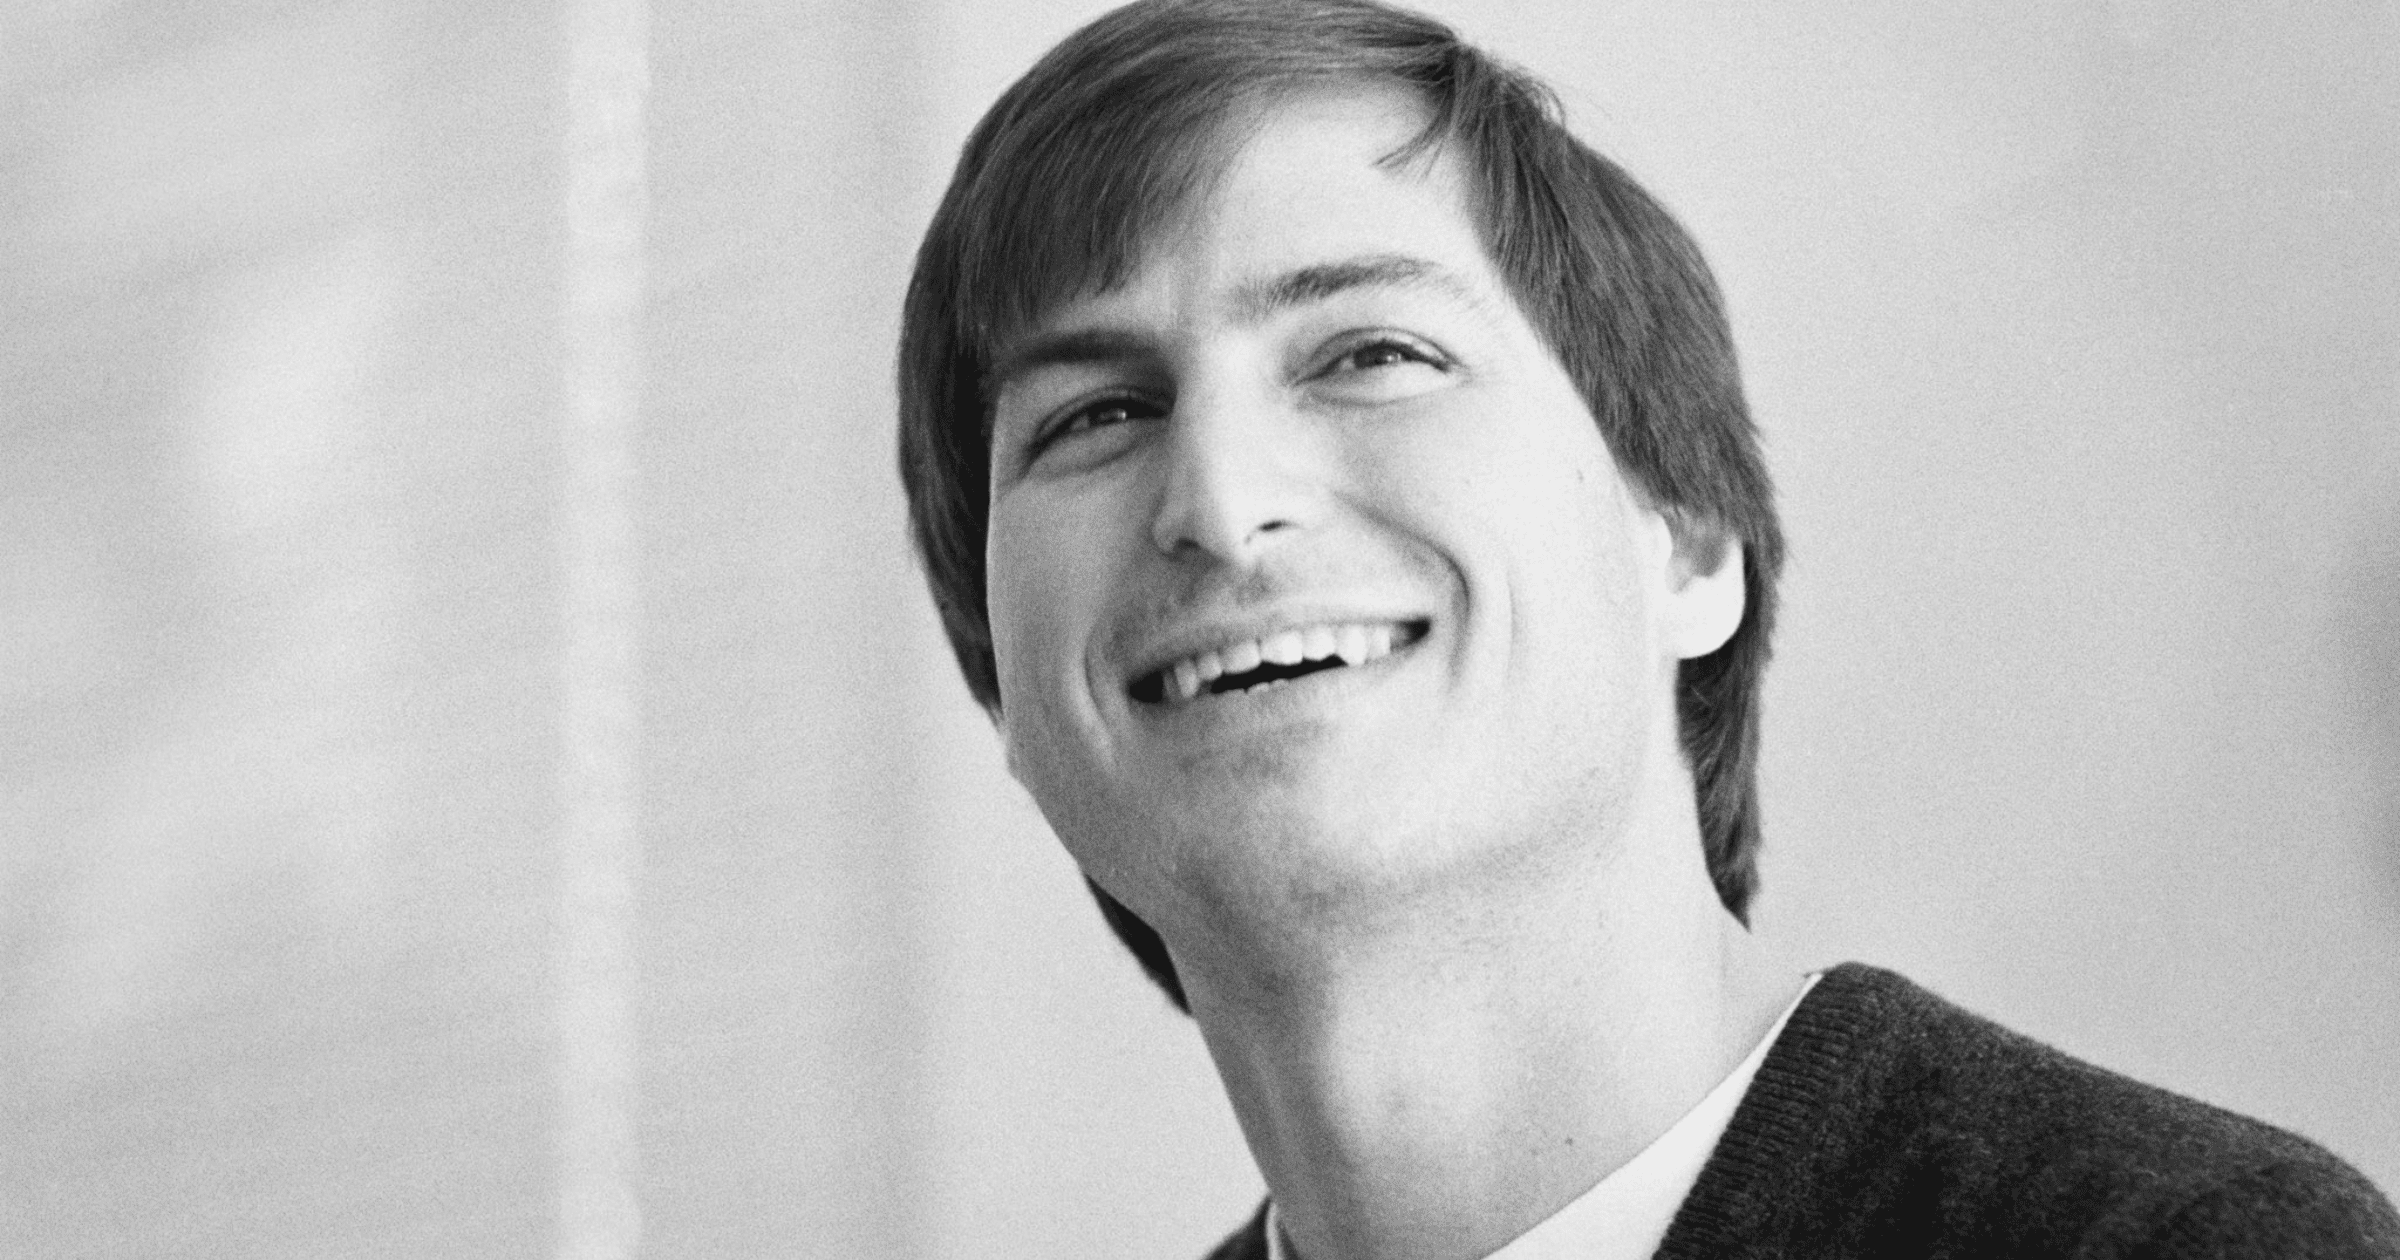 Steve Jobs 66 birthday